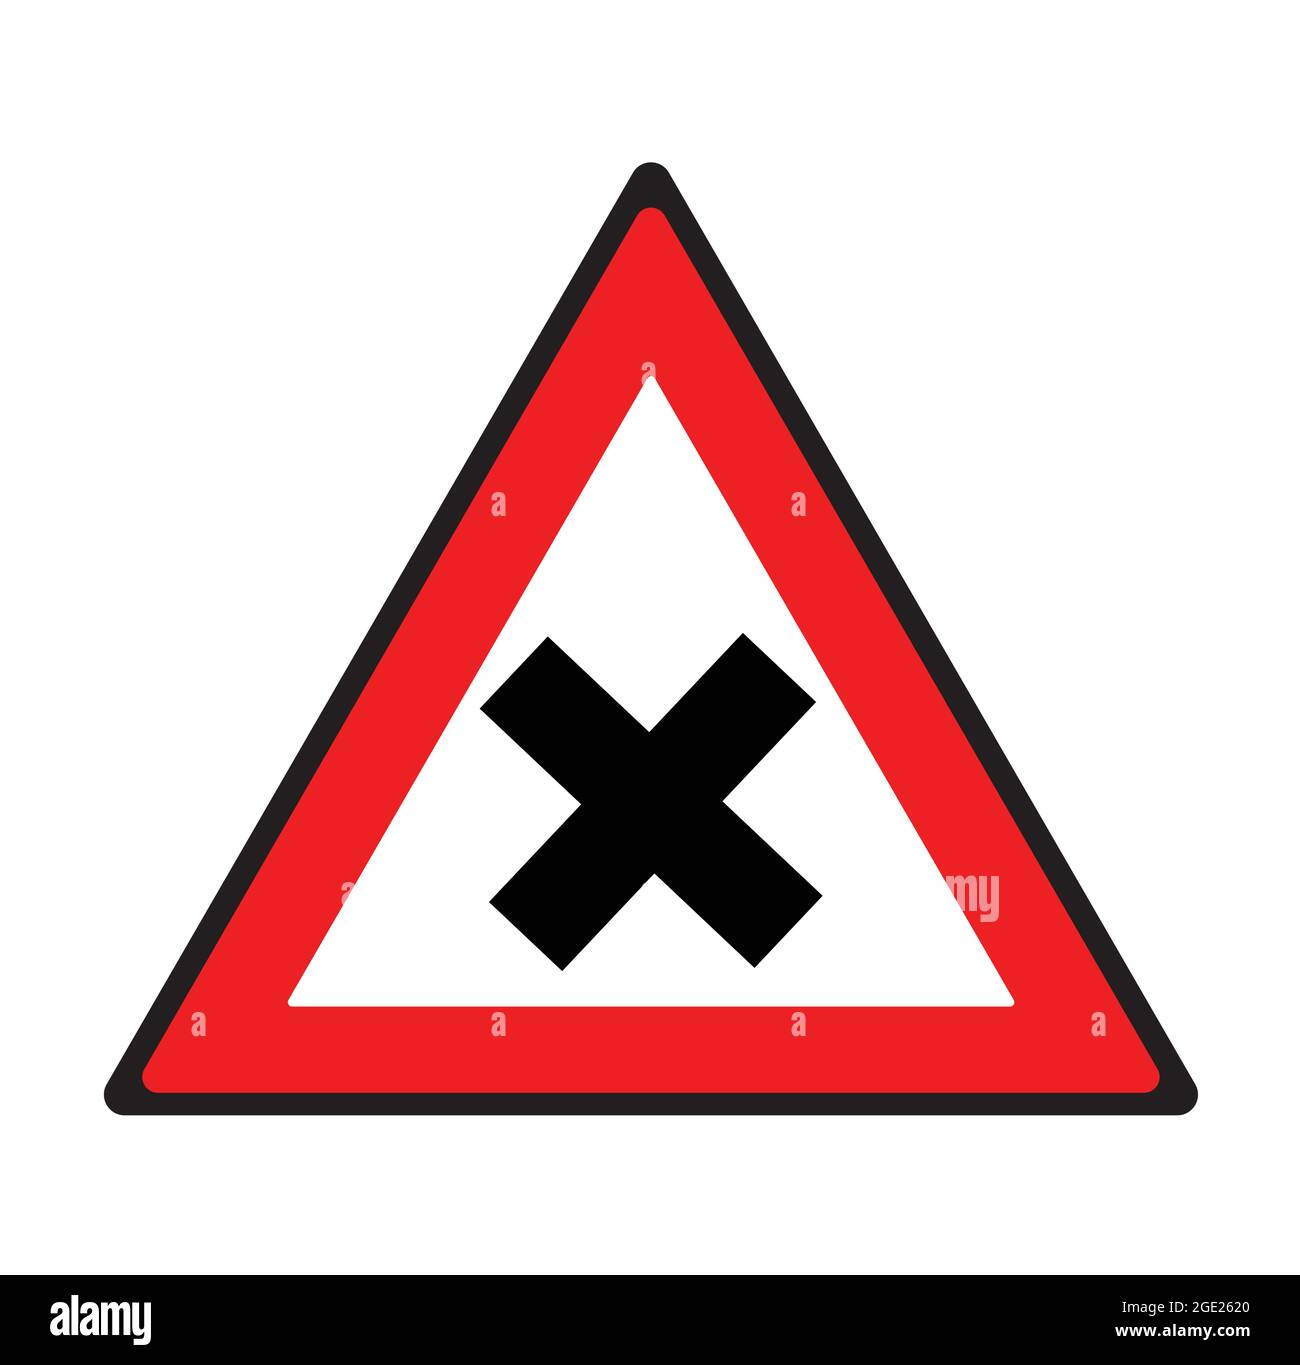 Cross or danger road sign. Safety symbol. Stock Vector